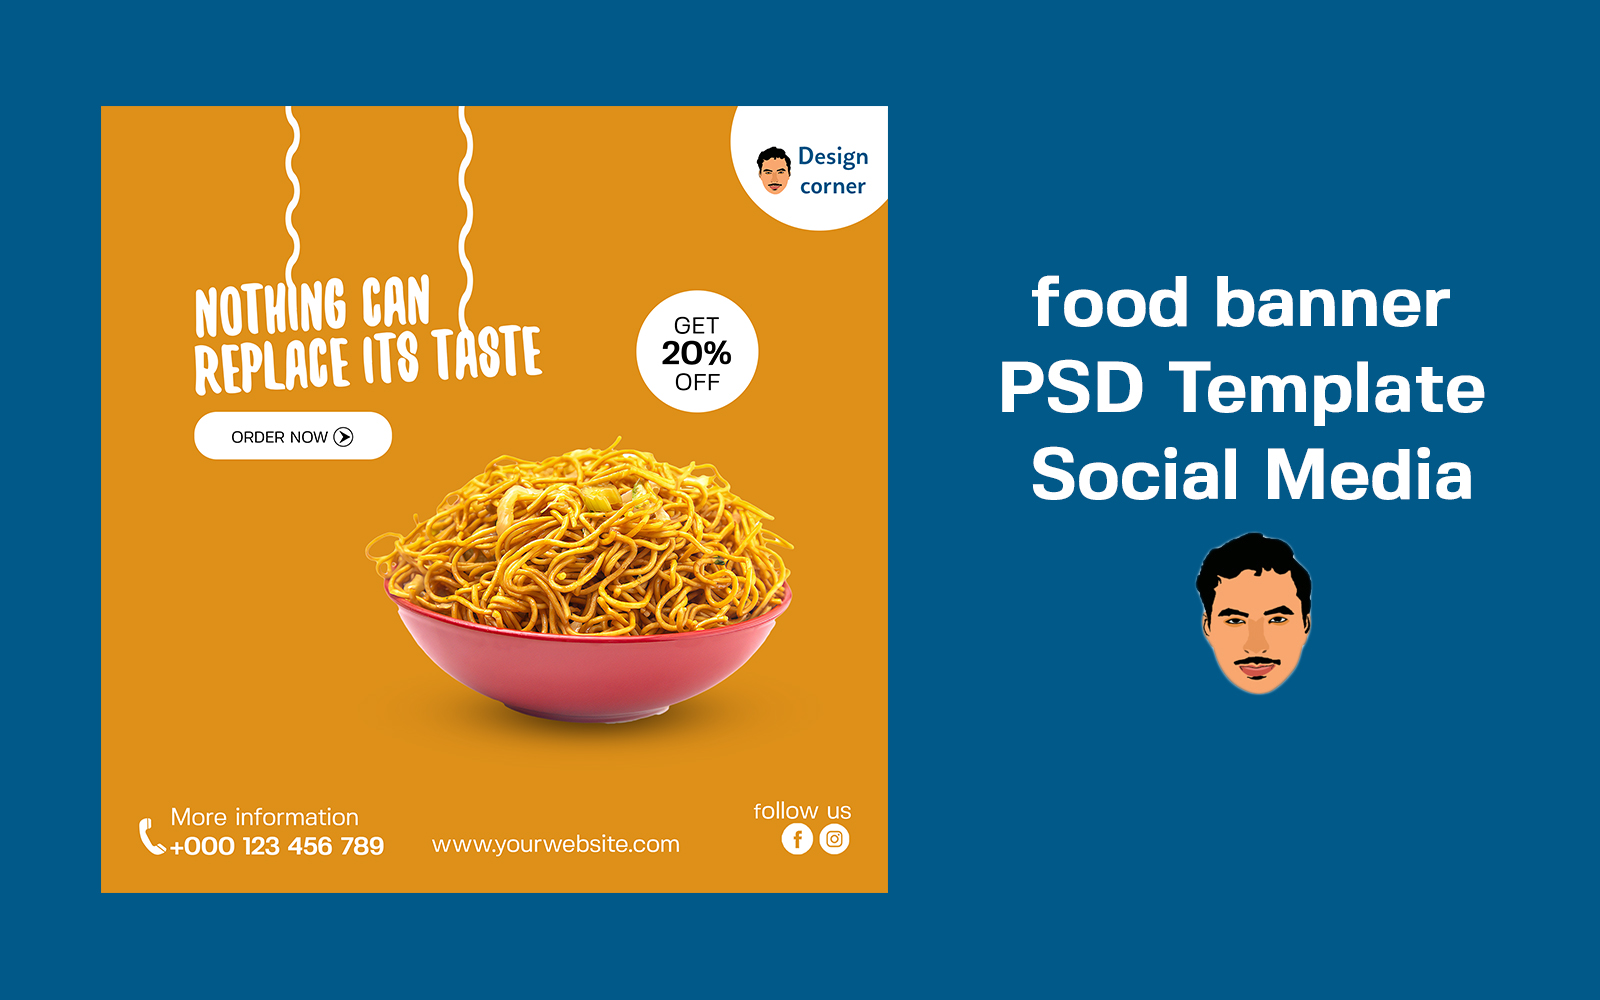 Food Banner PSD Template Social Media